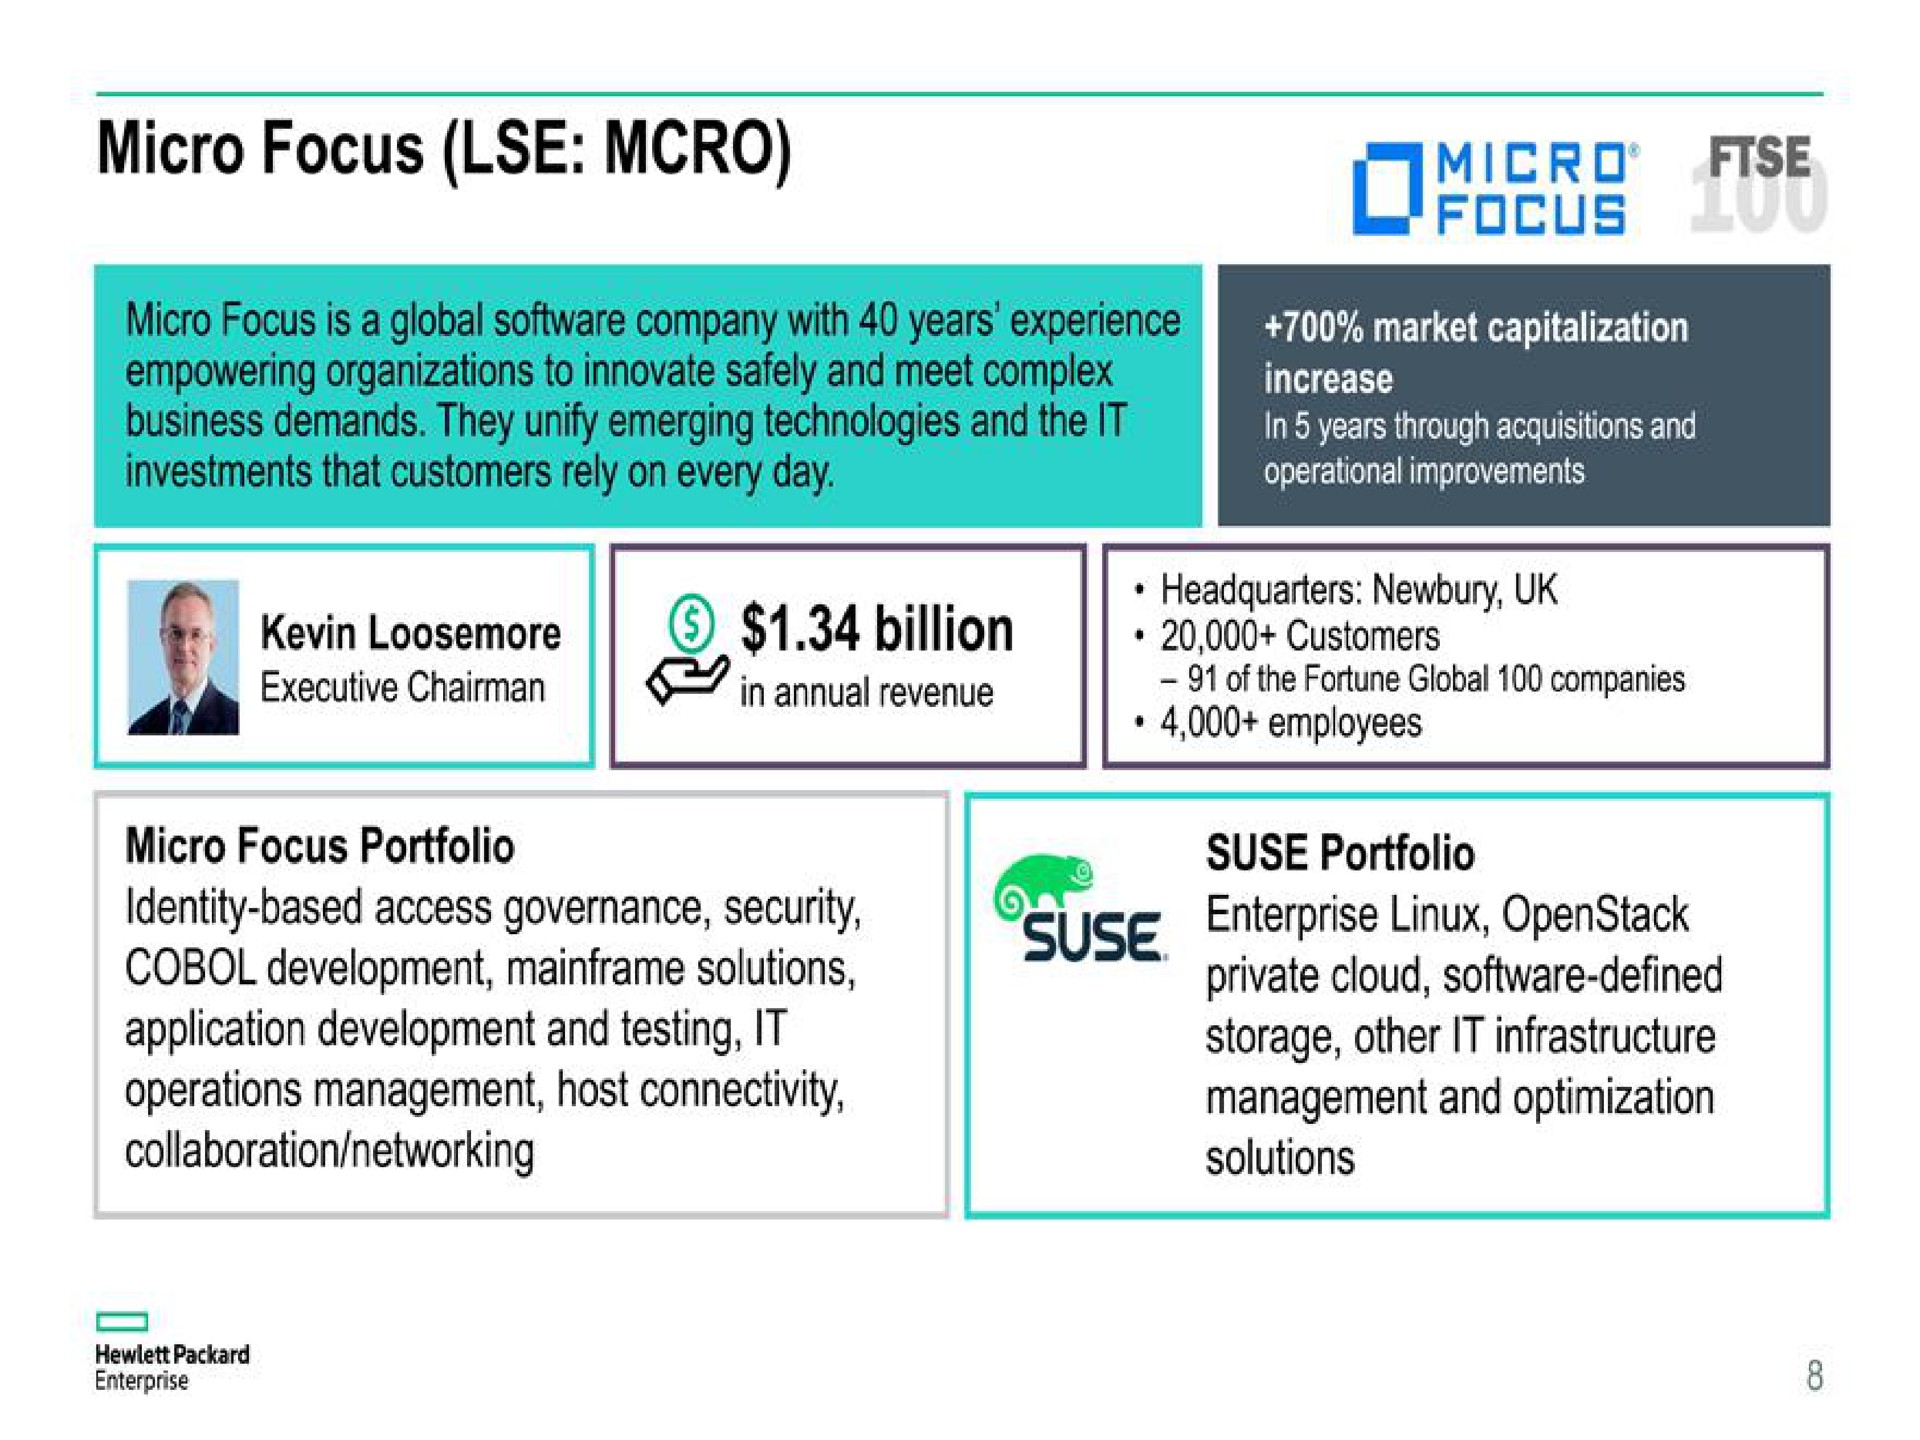 fise micro focus micro focus | Hewlett Packard Enterprise